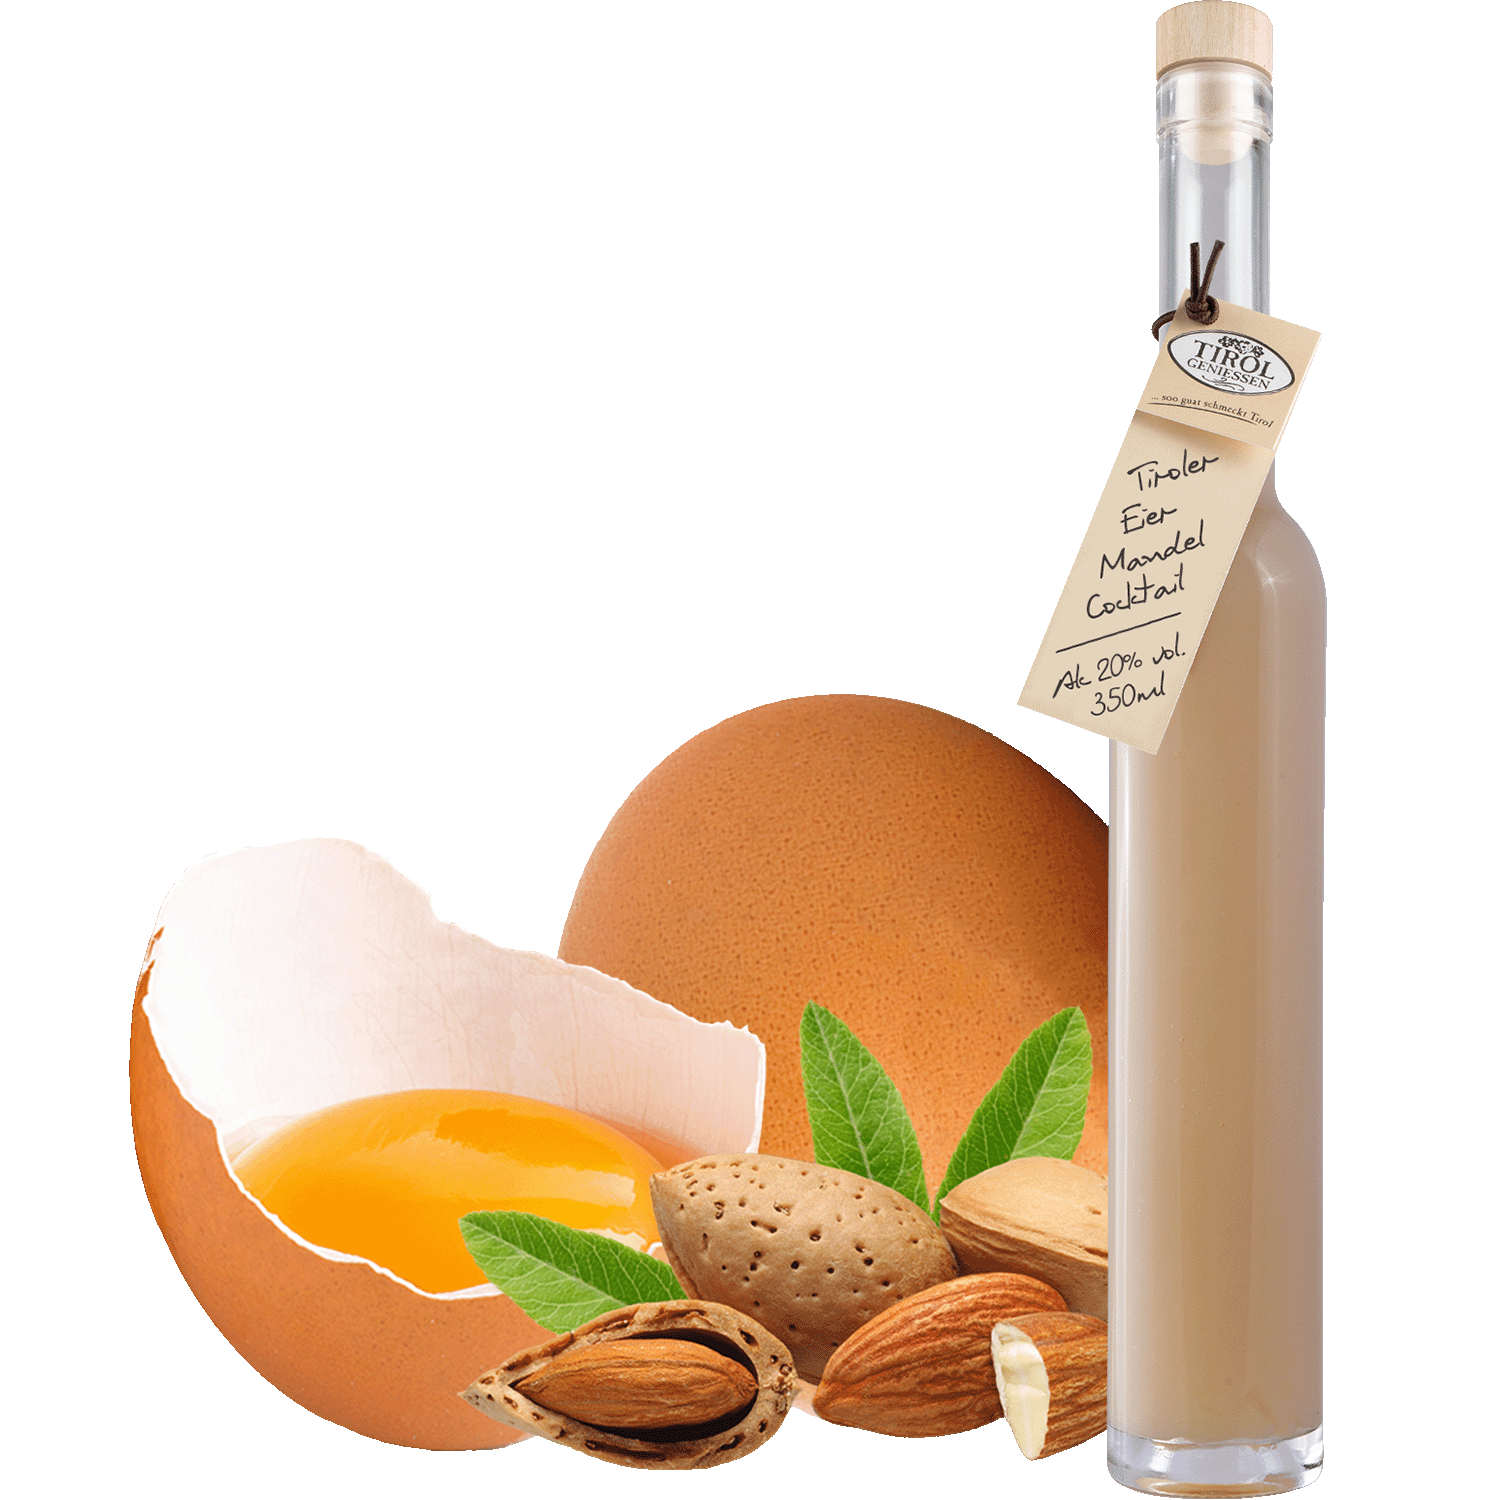 Egg Almond Cocktail Liqueur in gift bottle from Austria from Tirol Geniessen